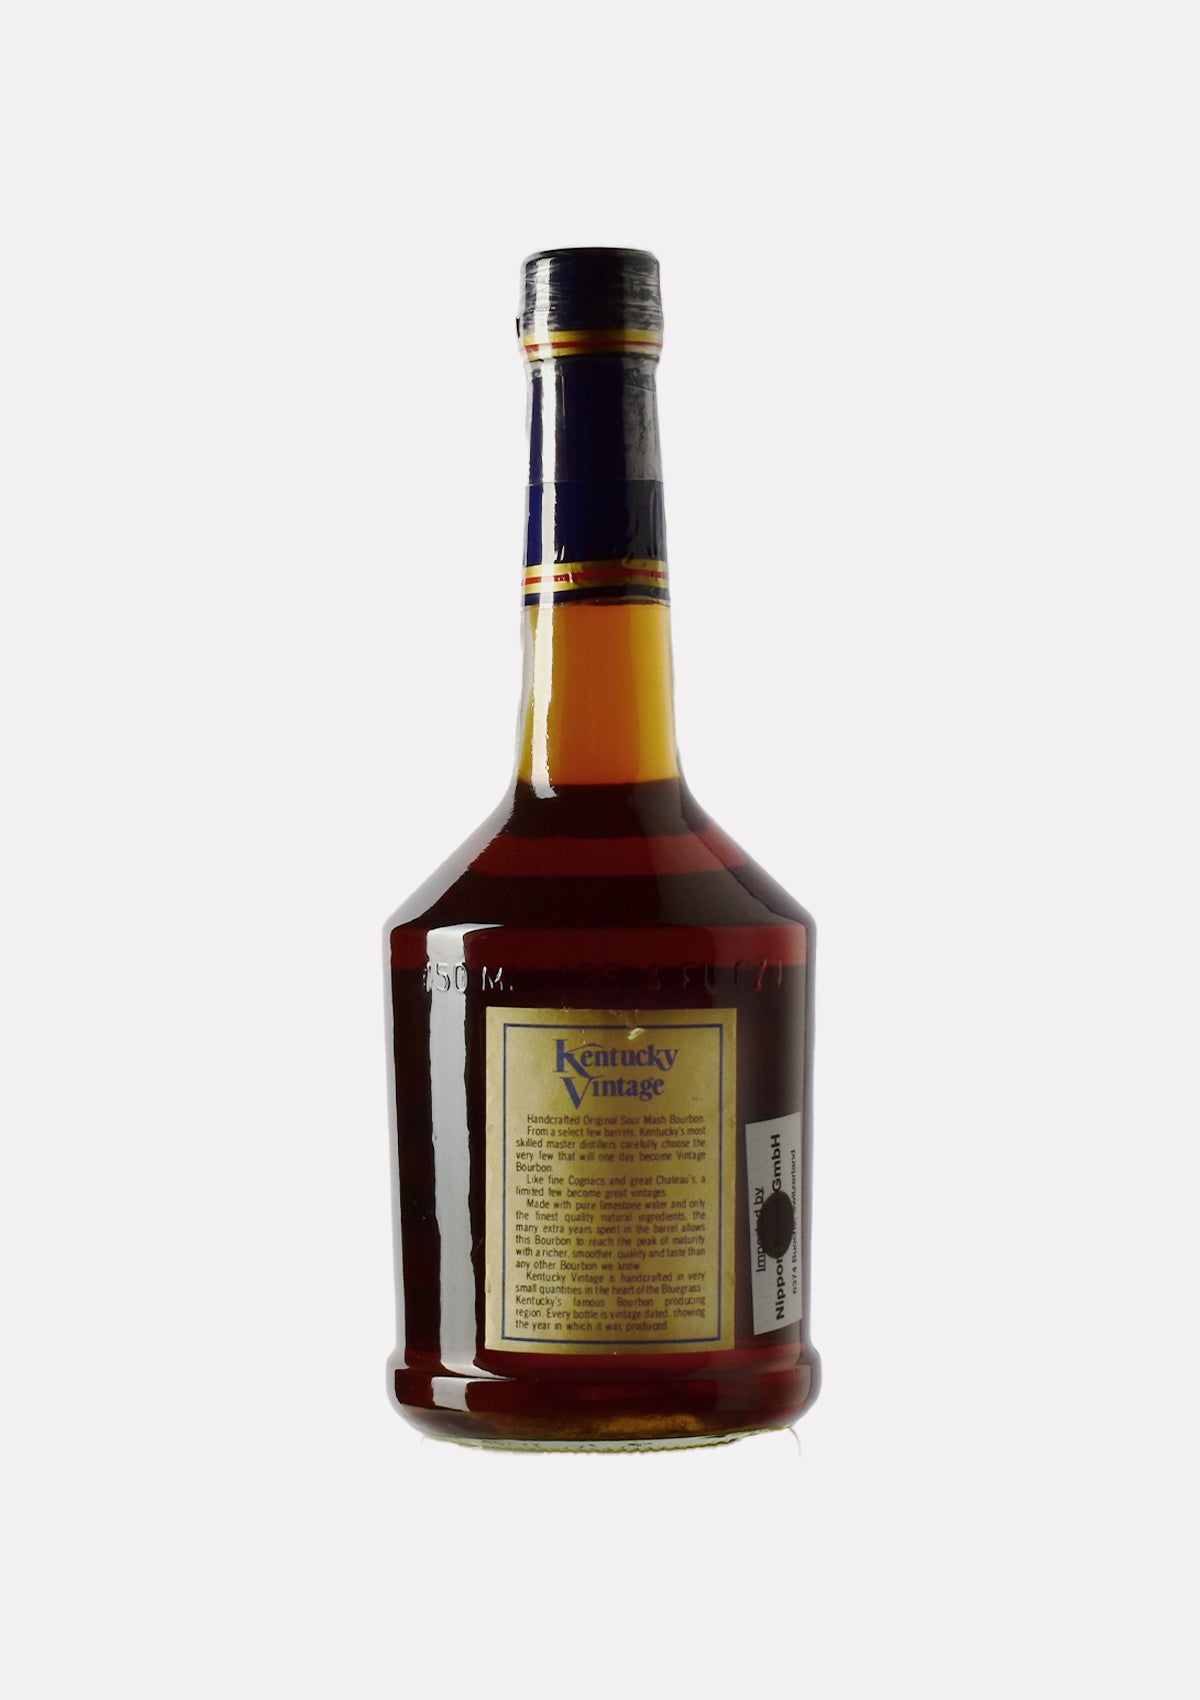 Kentucky Vintage Bourbon 1976